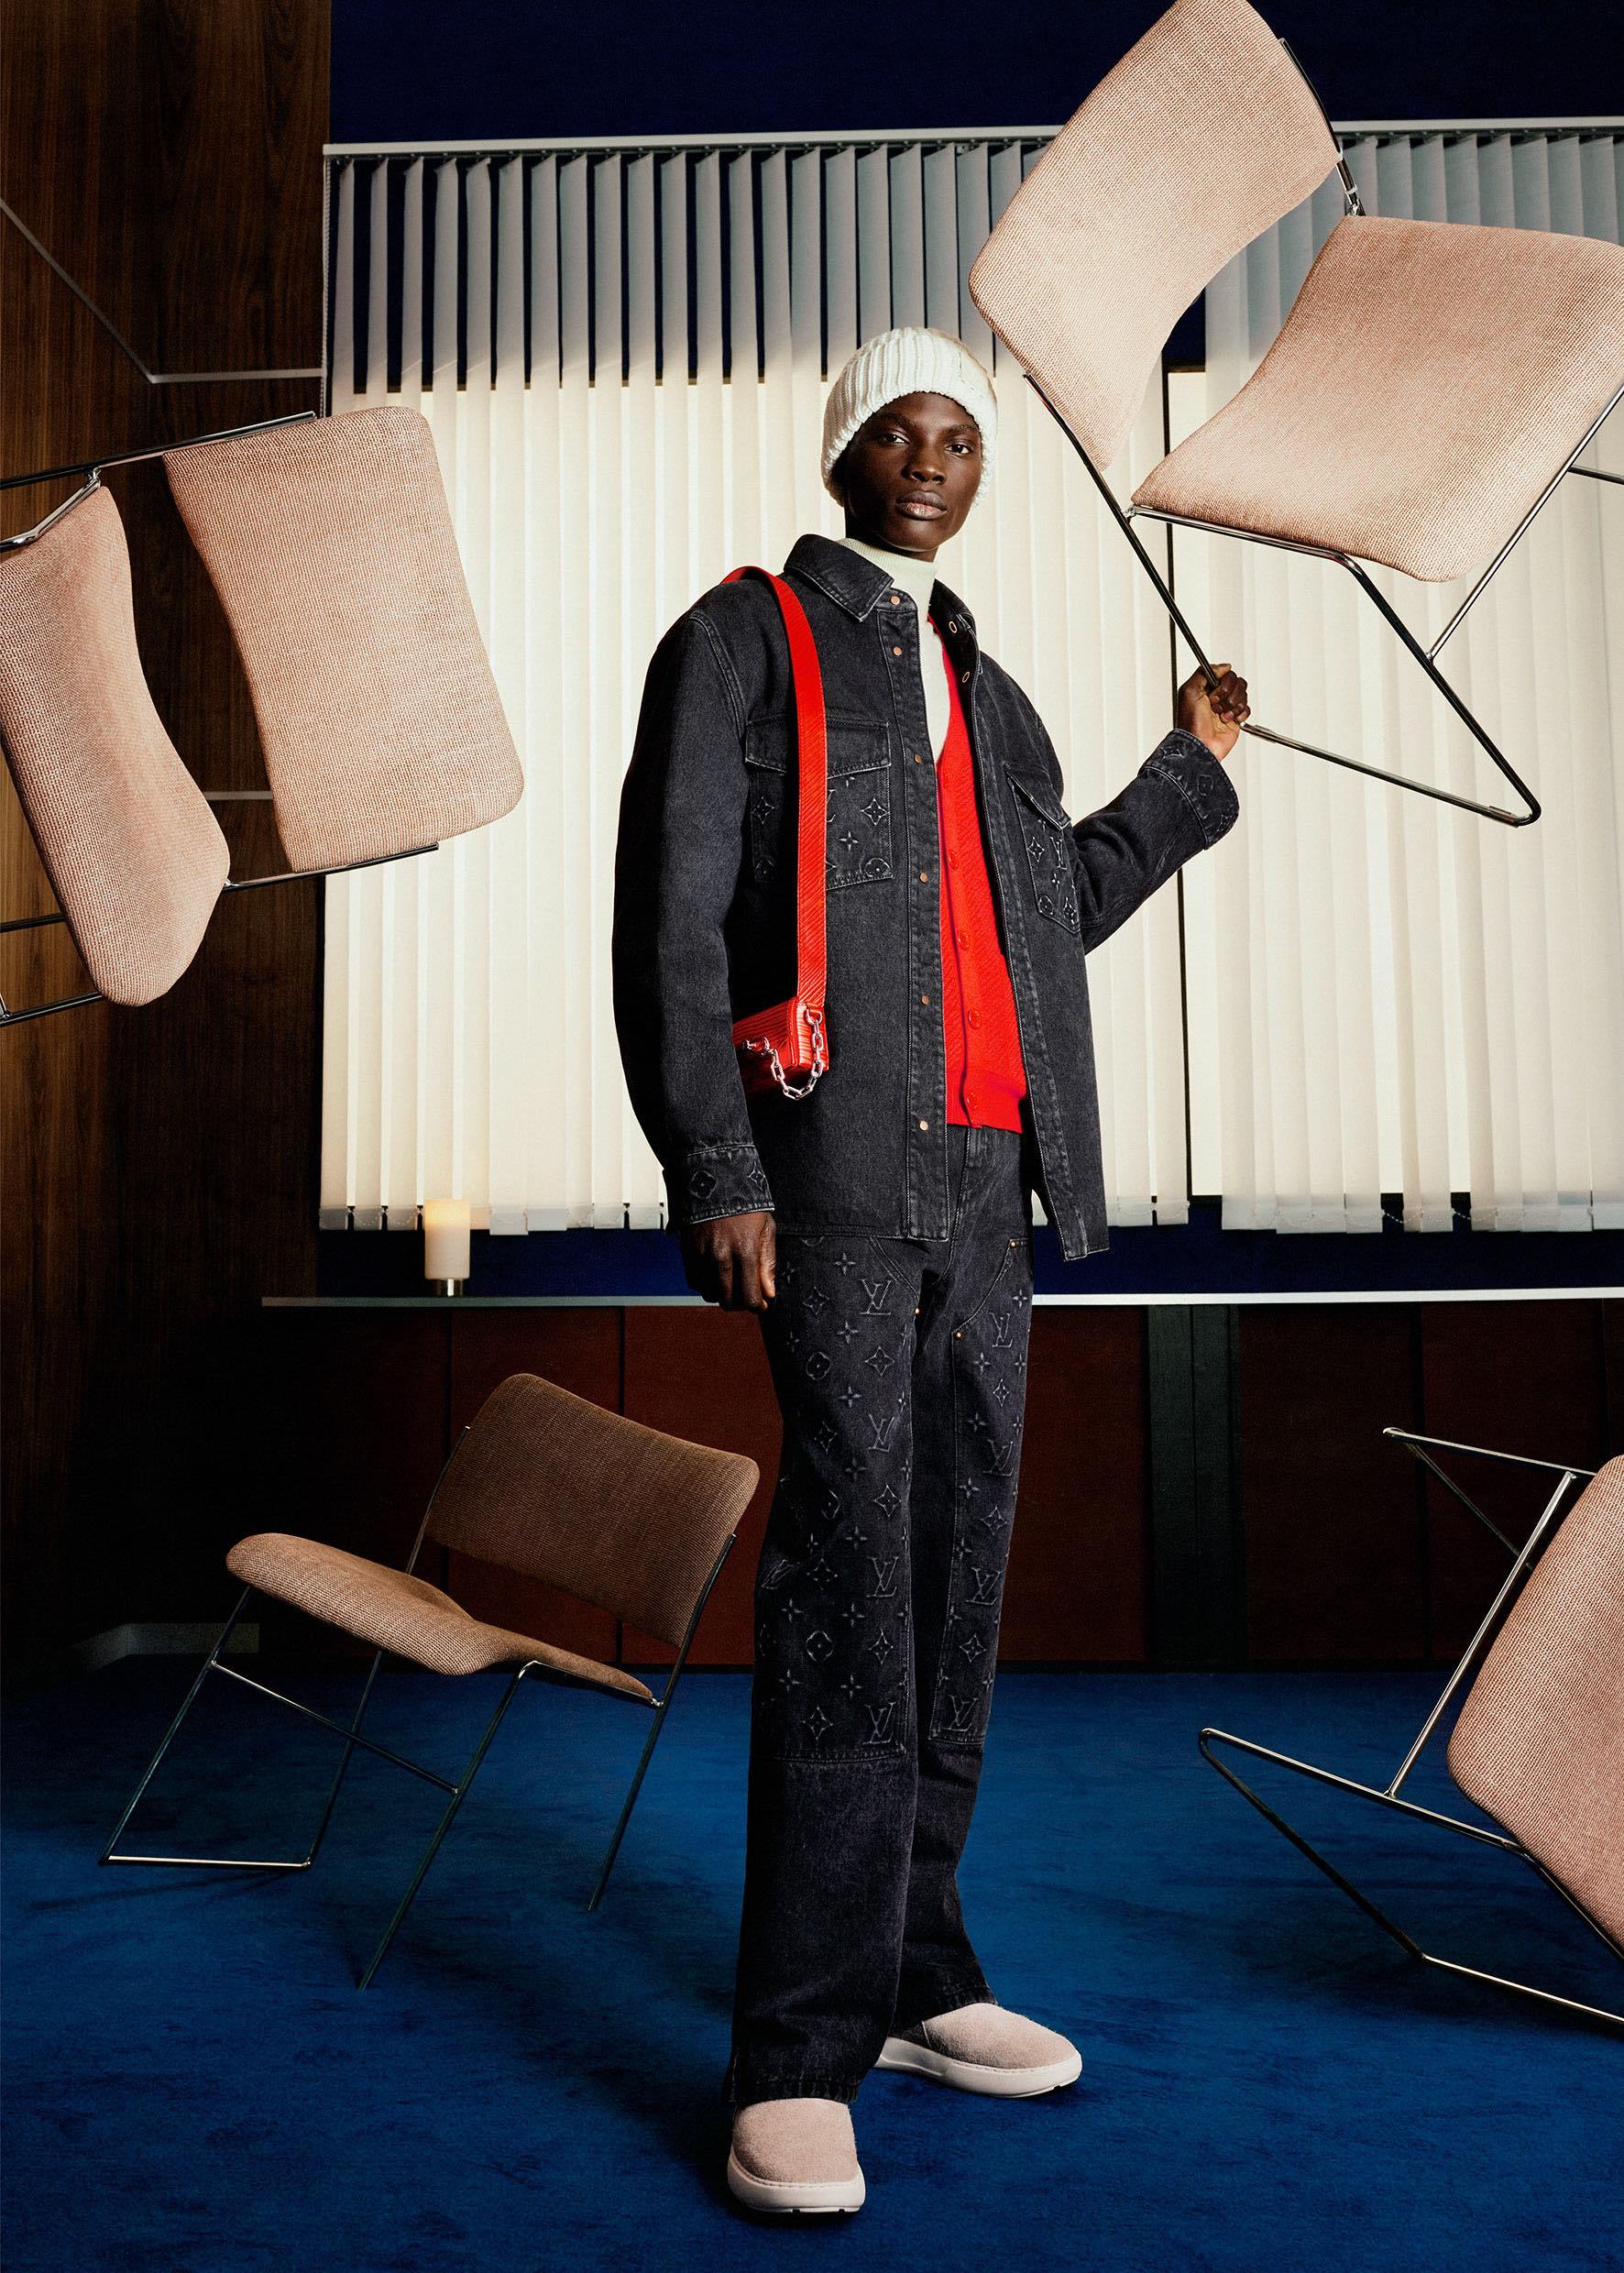 Louis Vuitton Studio Prêt-à-Porter Homme present their Fall